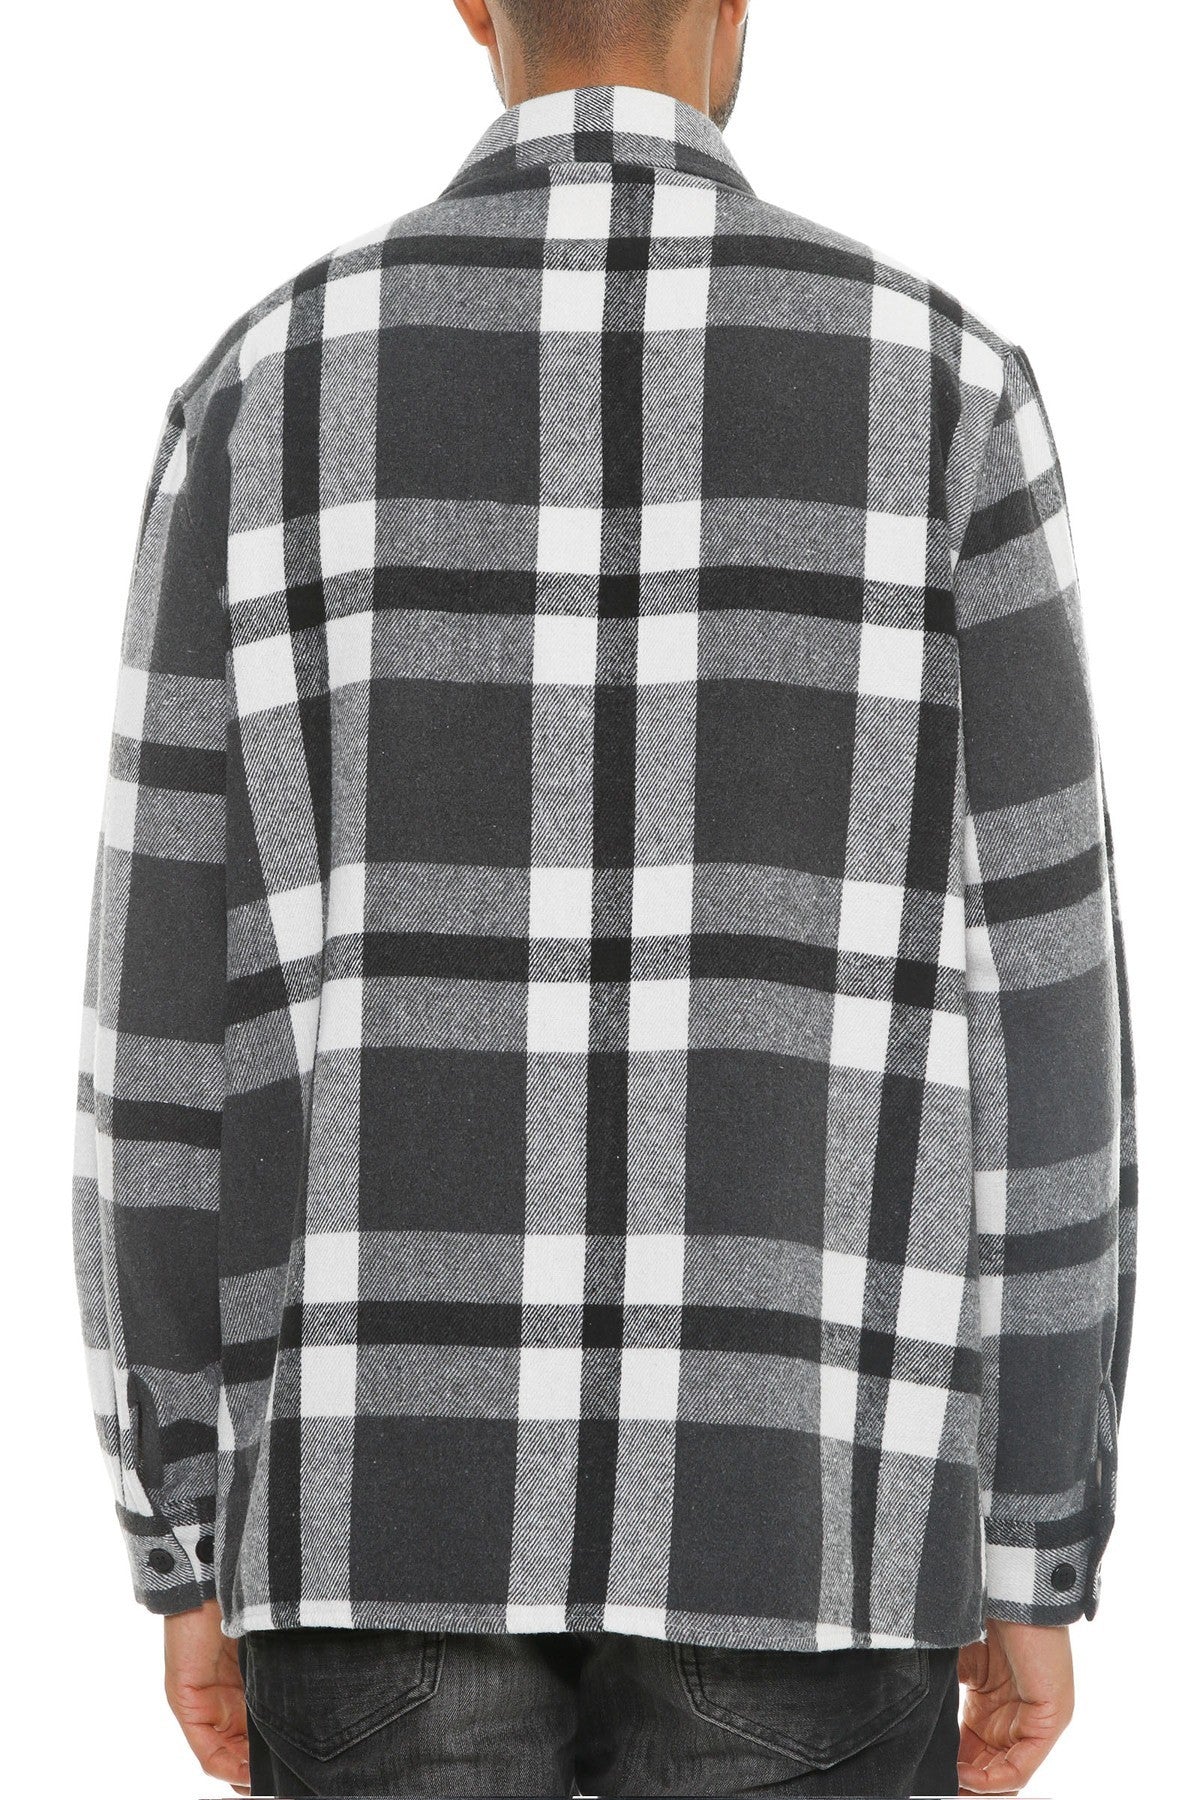 Men's Checkered Soft Flannel